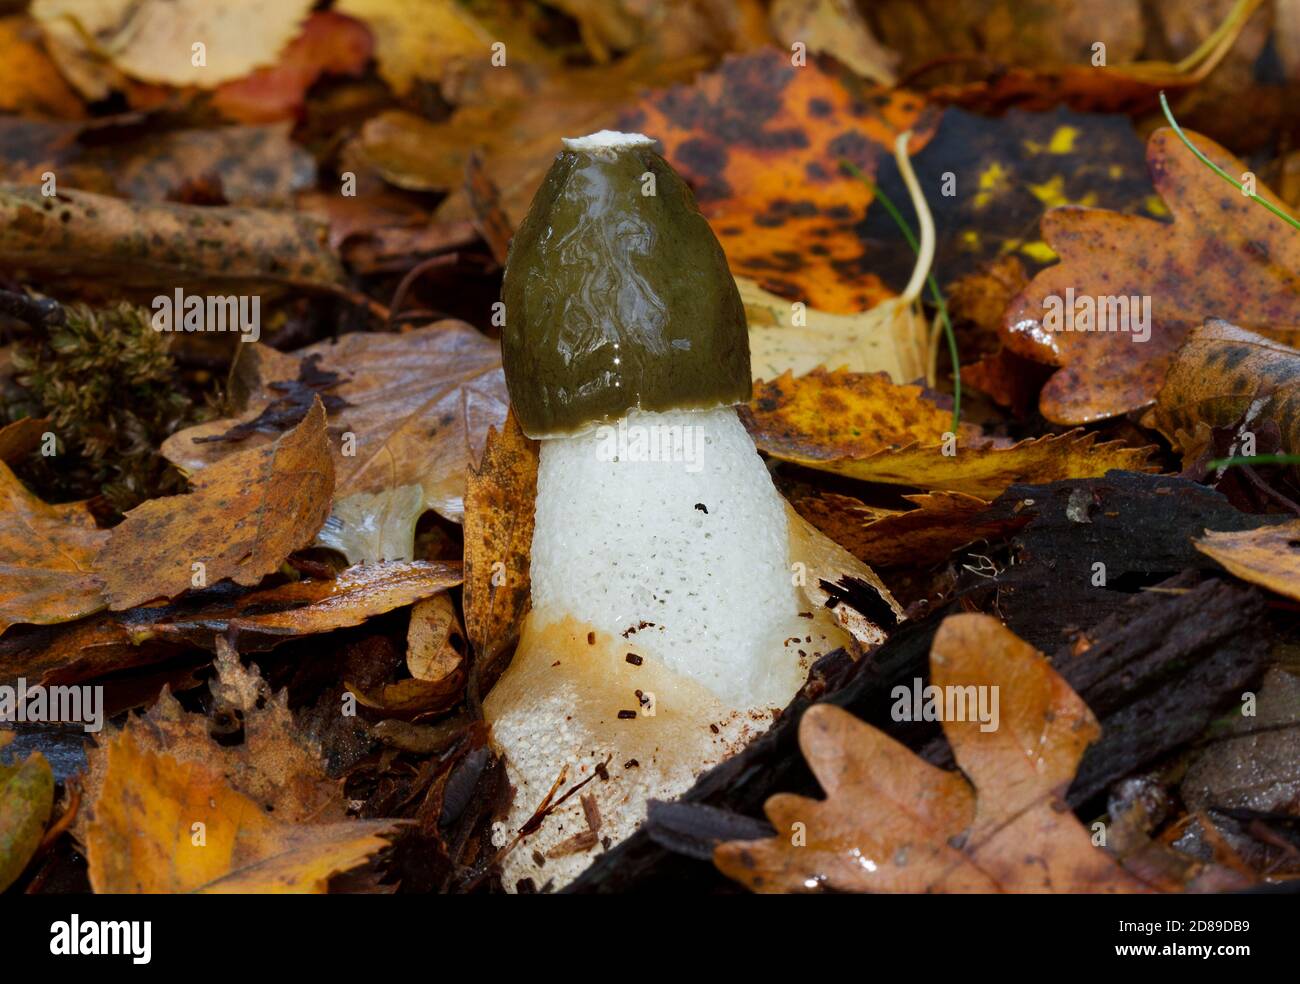 Slimy Common stinkhorn between autumn leaves Stock Photo